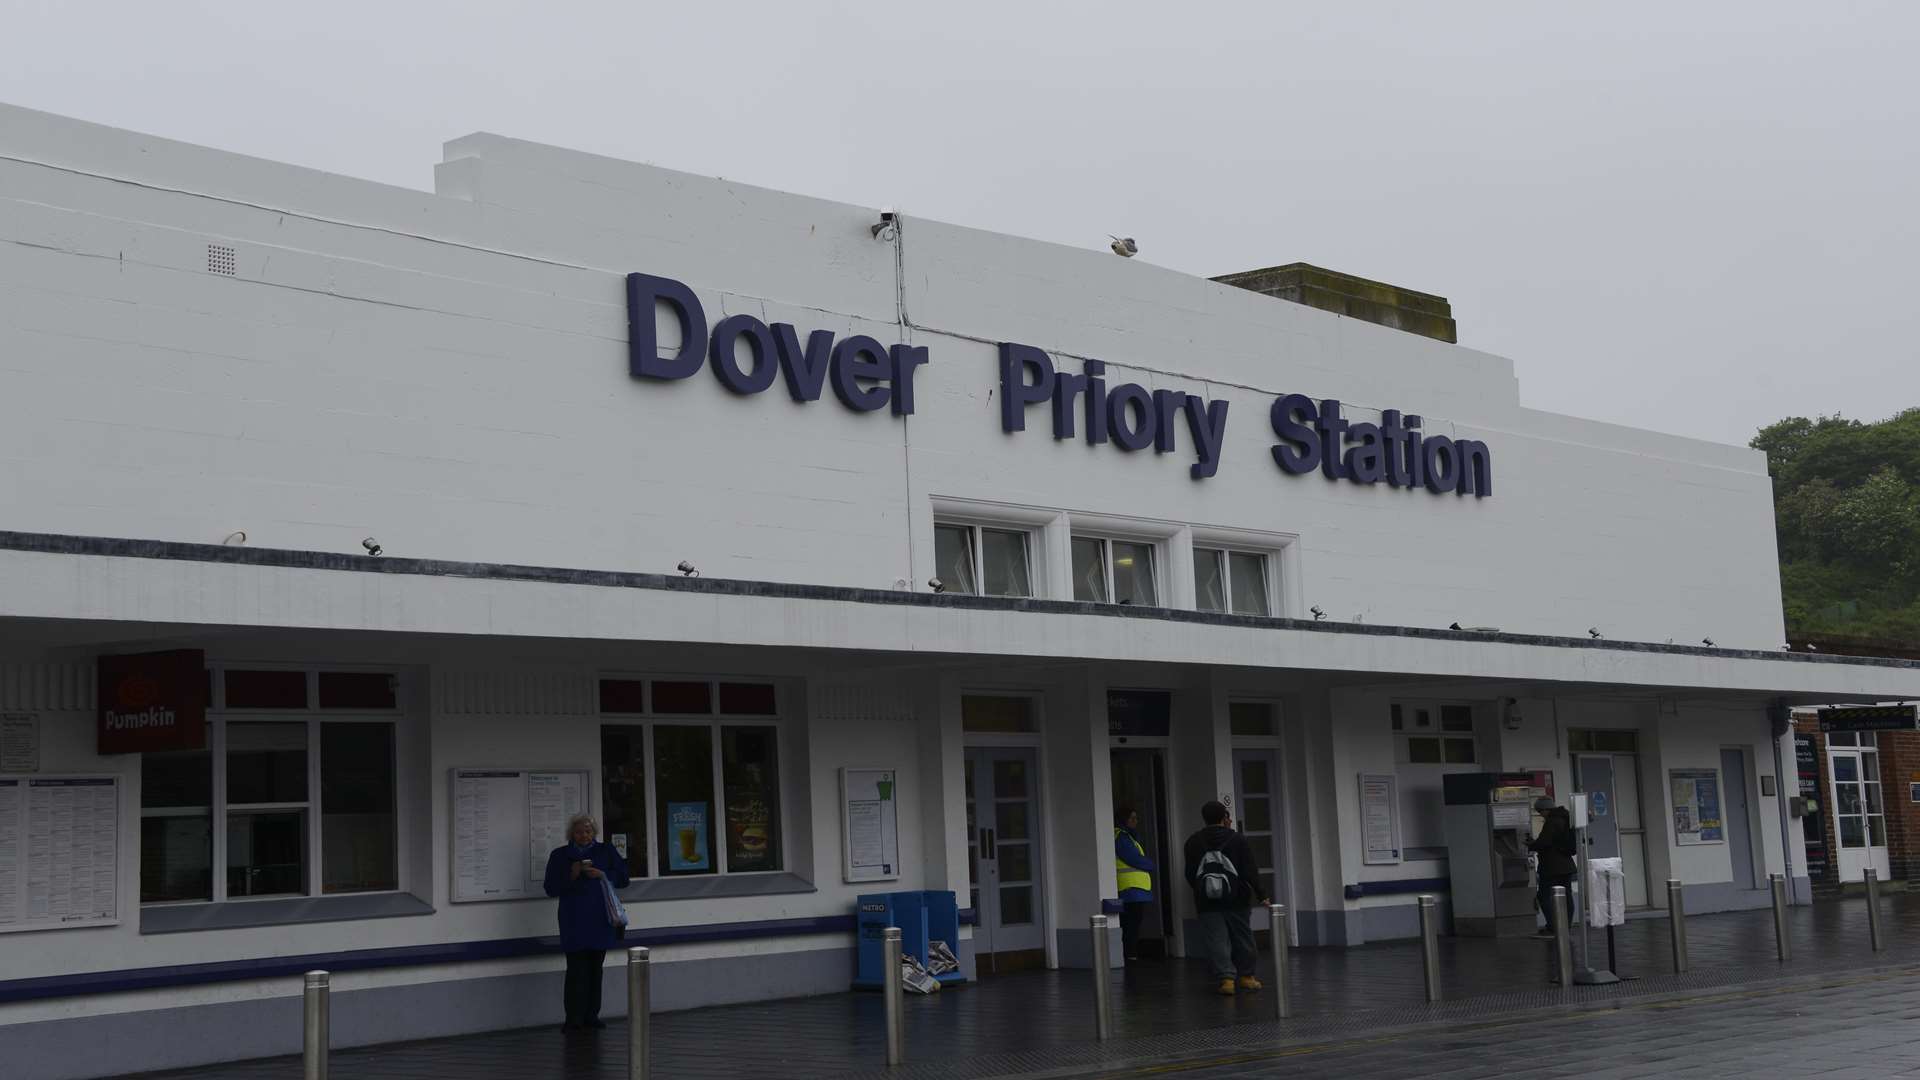 Dover Priory Station